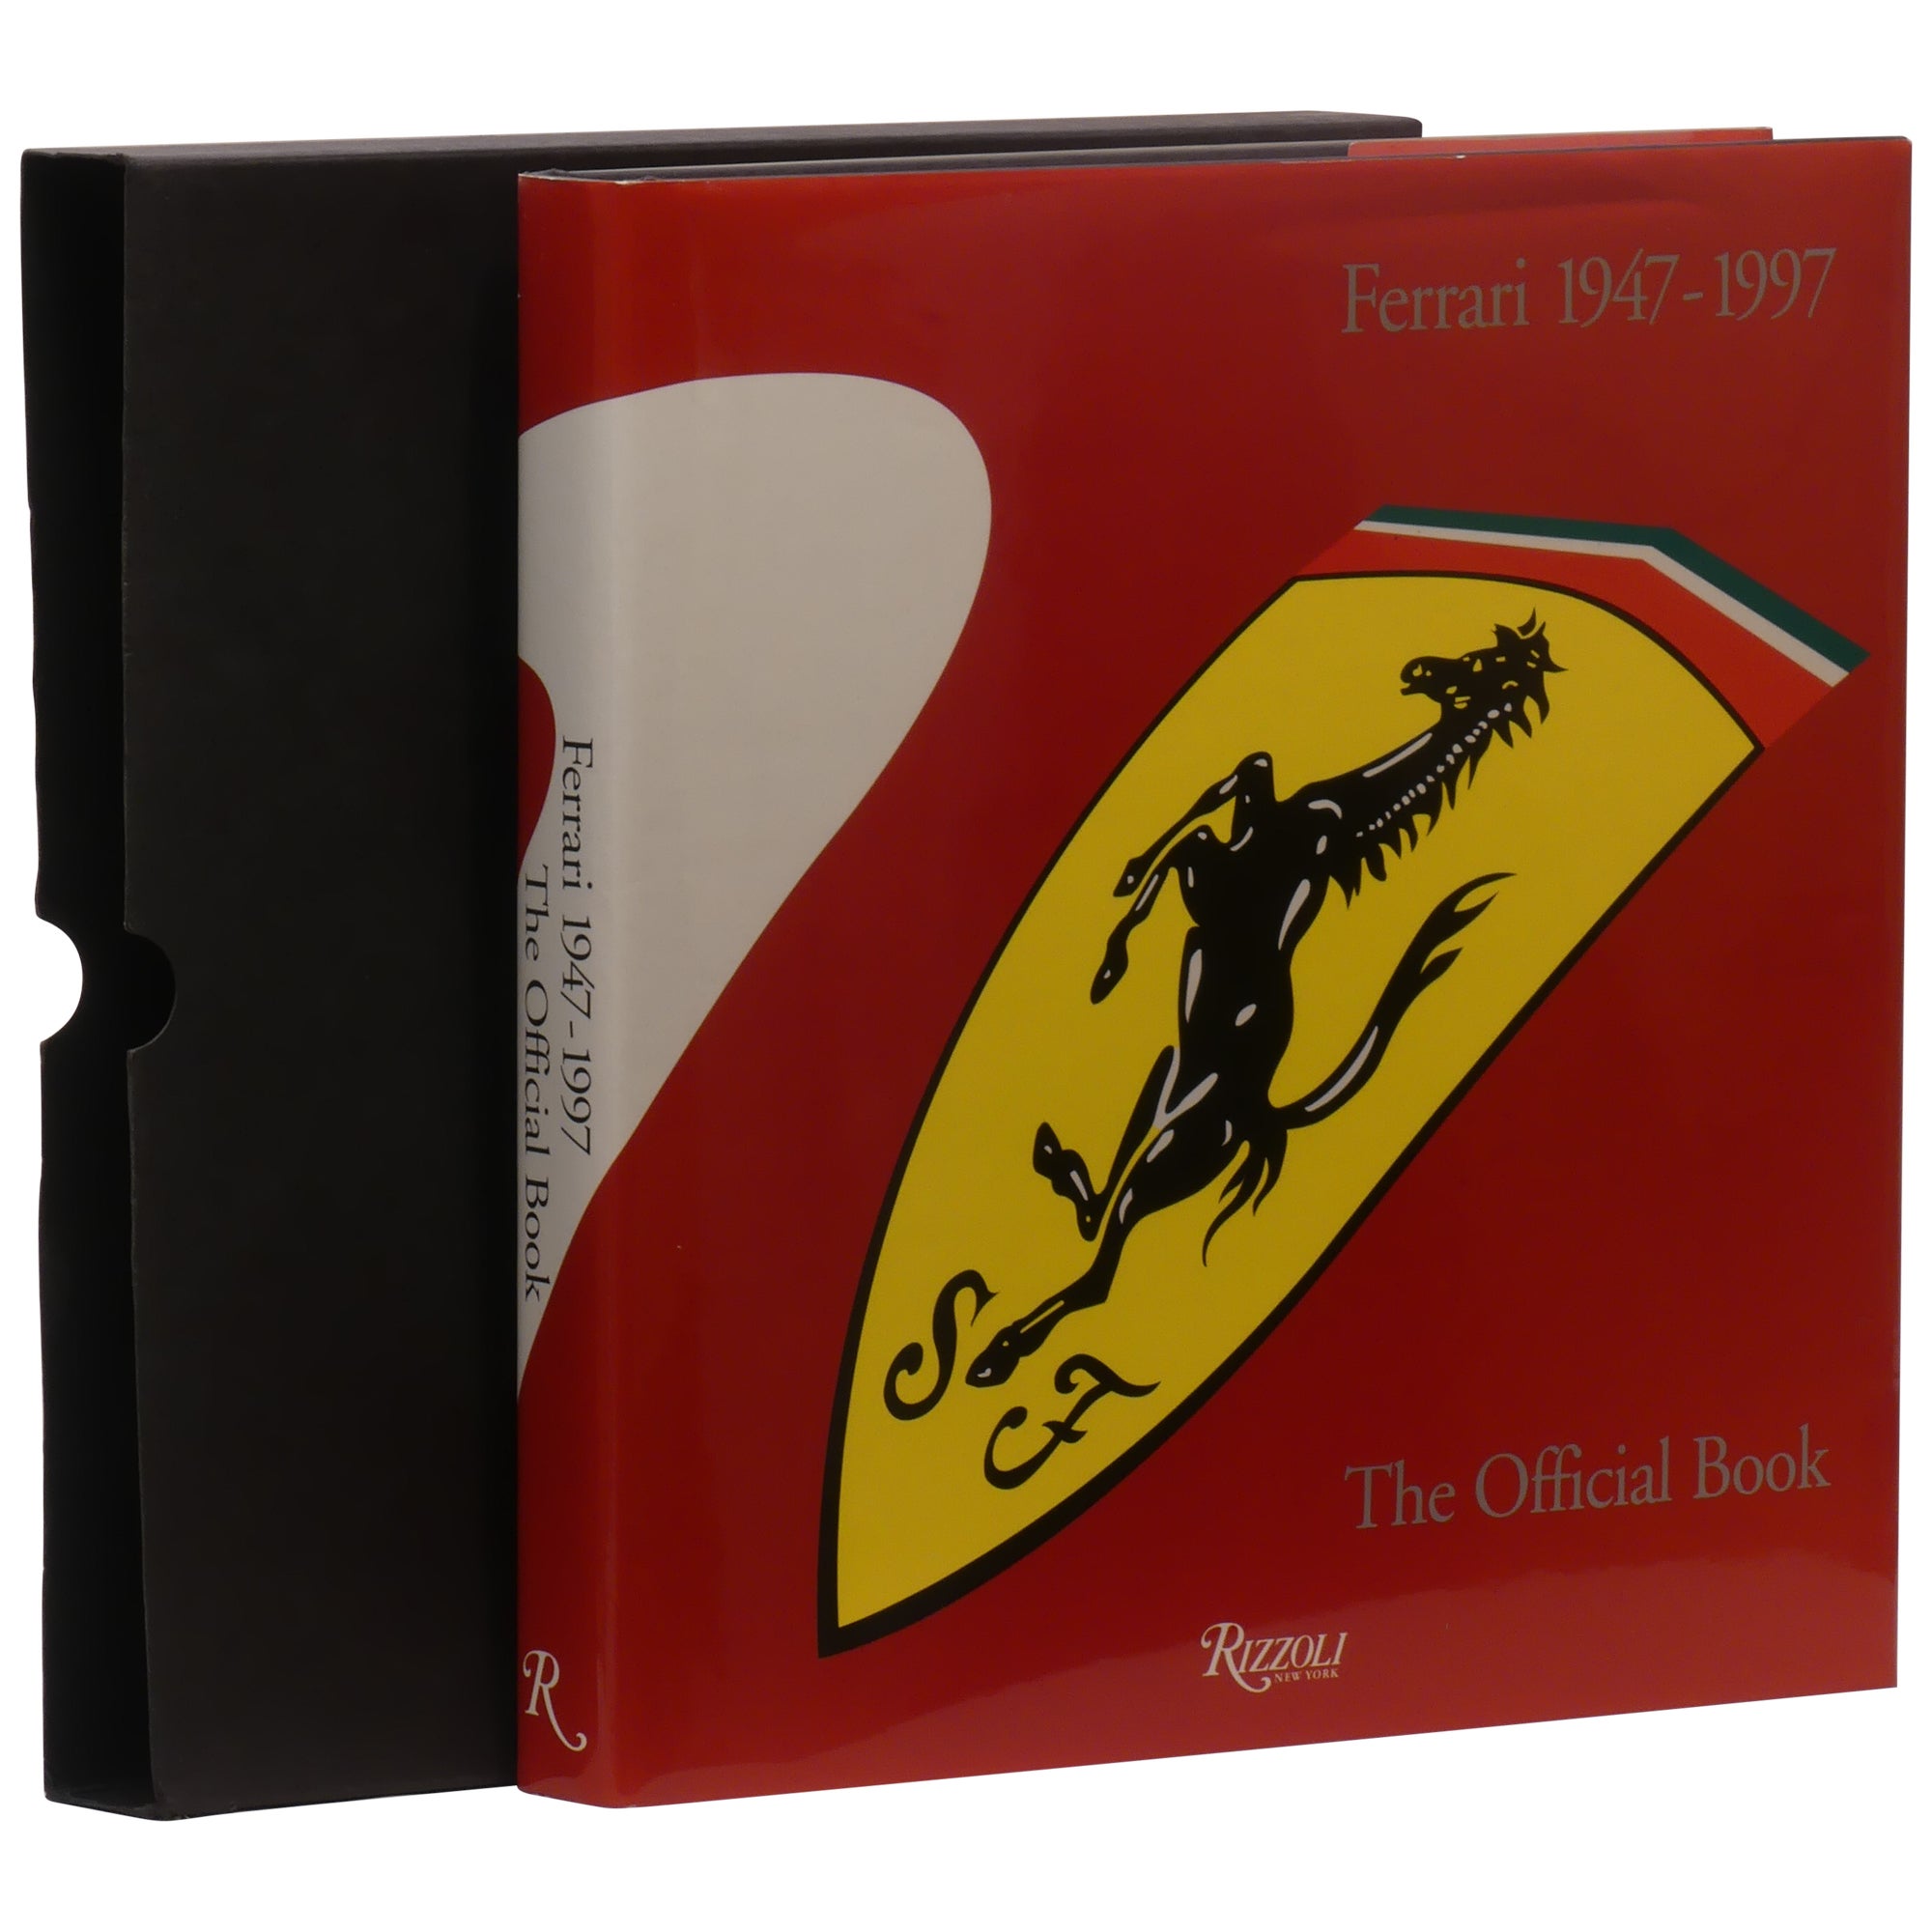 Ferrari 1947–1997 by Antonio Ghini on Downtown Brown Books